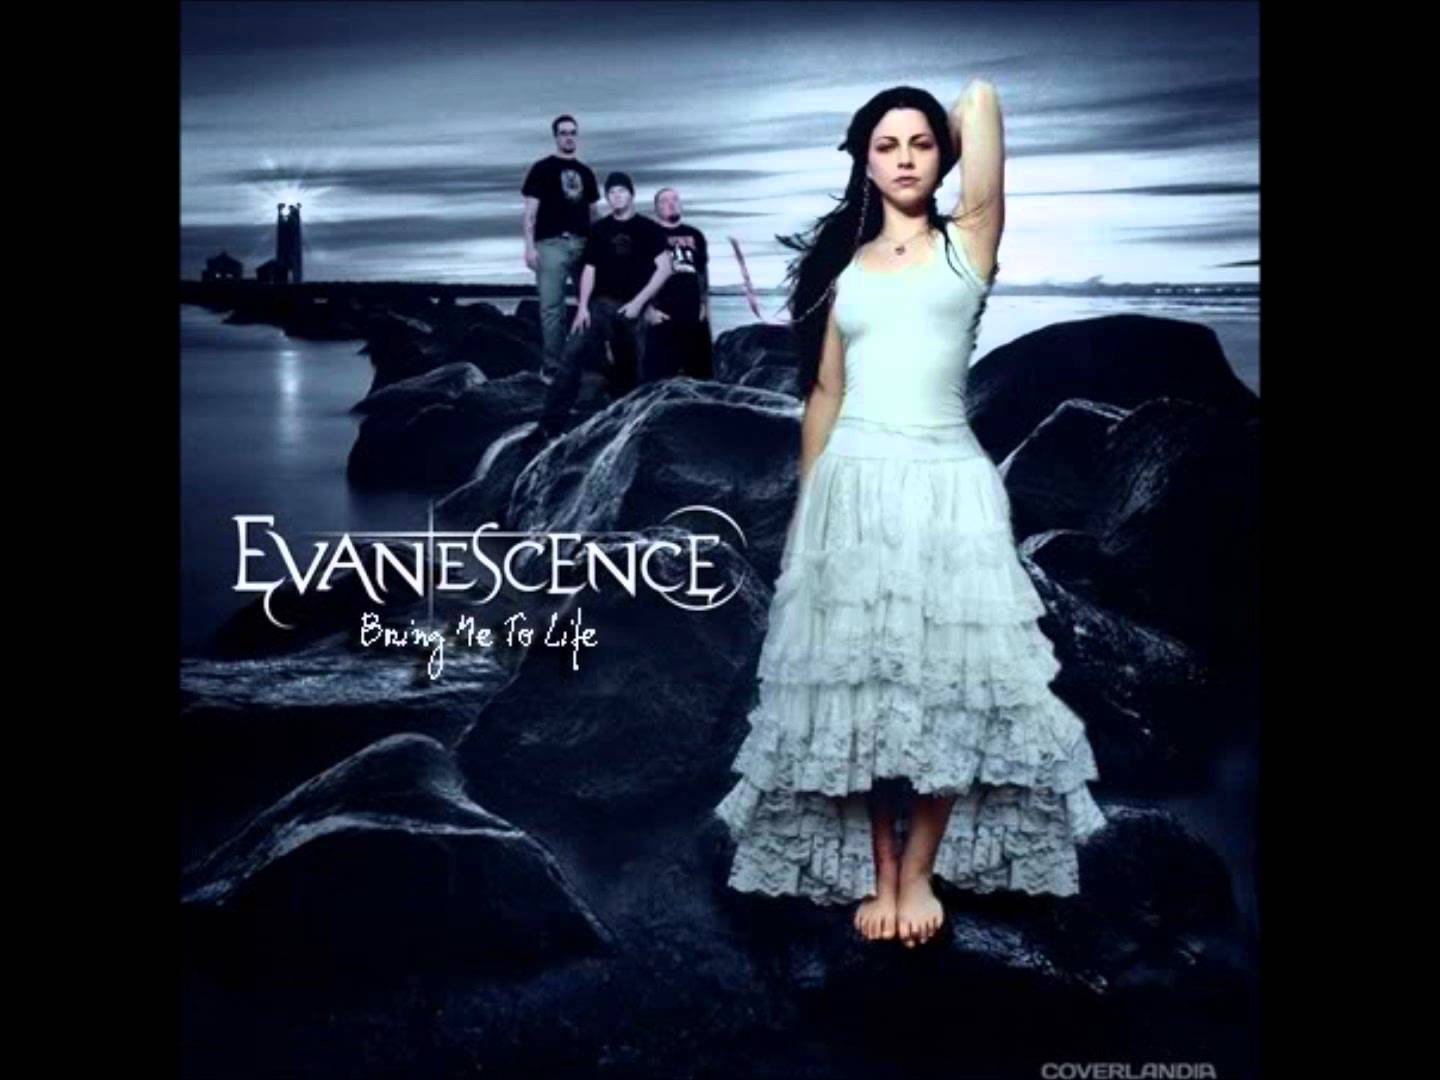 Life my cover. Evanescence 2023. Эми ли my Immortal. Эванесенс небоскреб. Evanescence bring me to Life 2003.